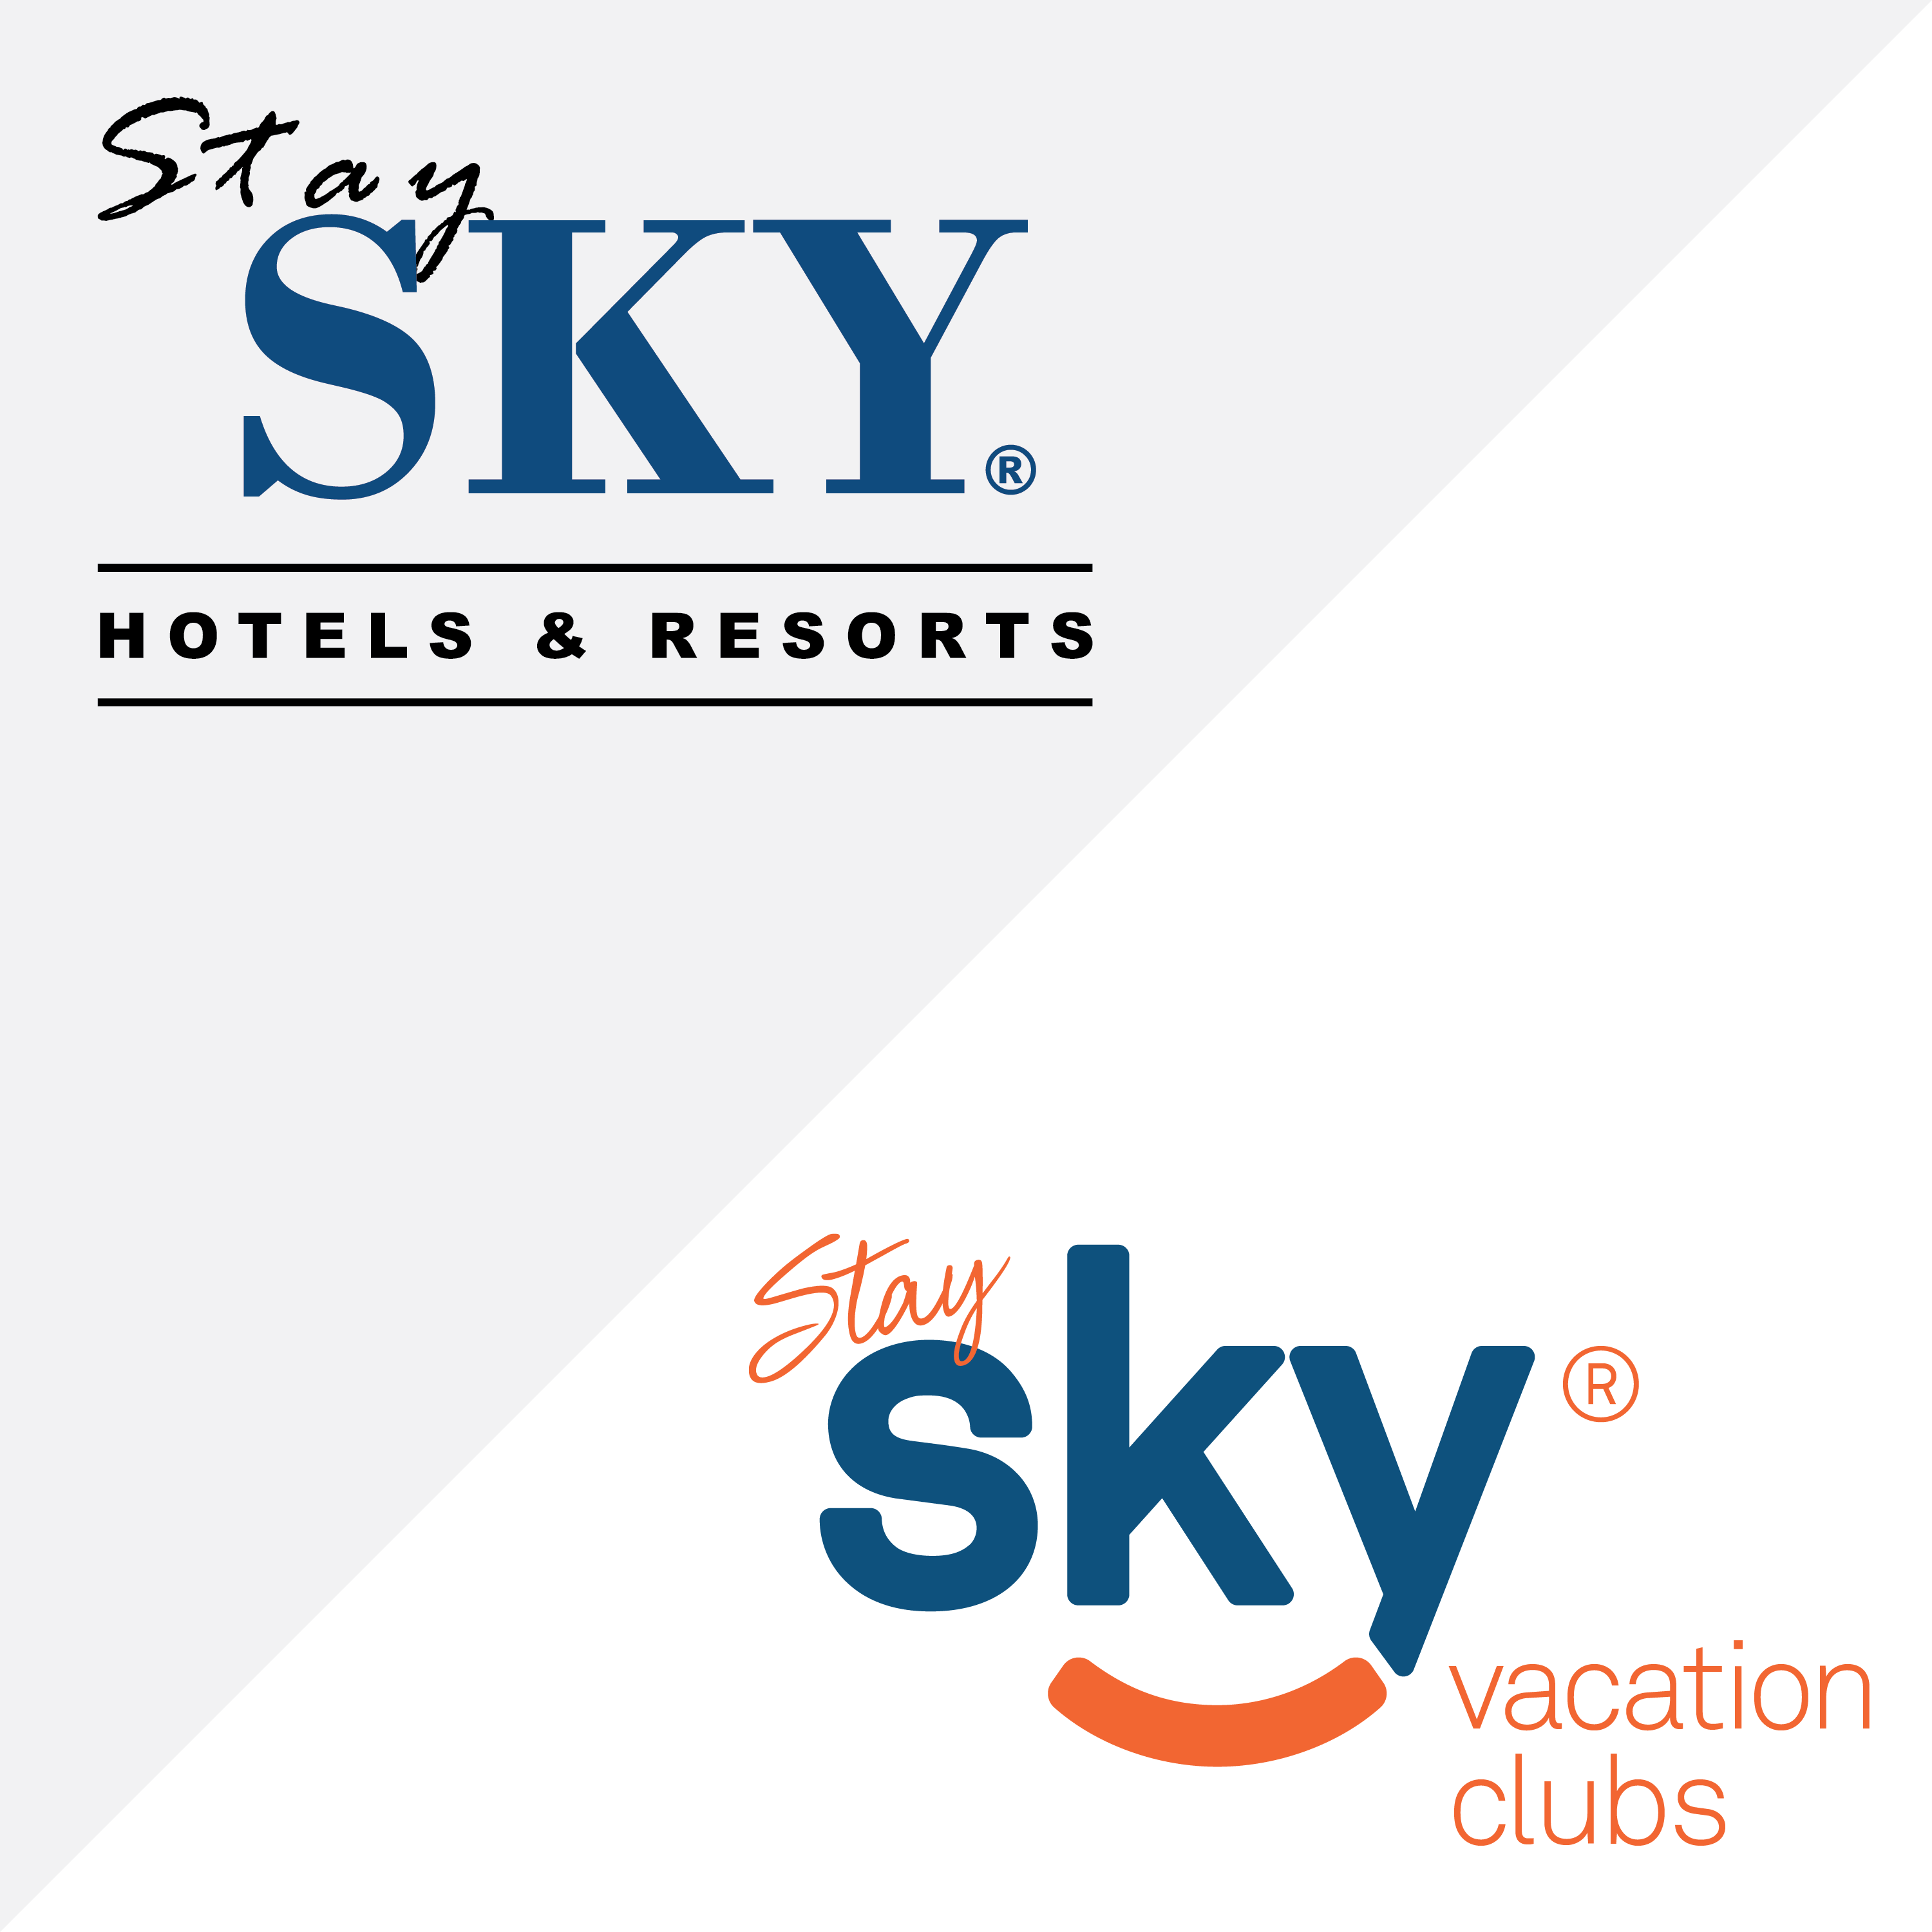 staySky Hotels & Resorts/ staySky Vacation Clubs logo